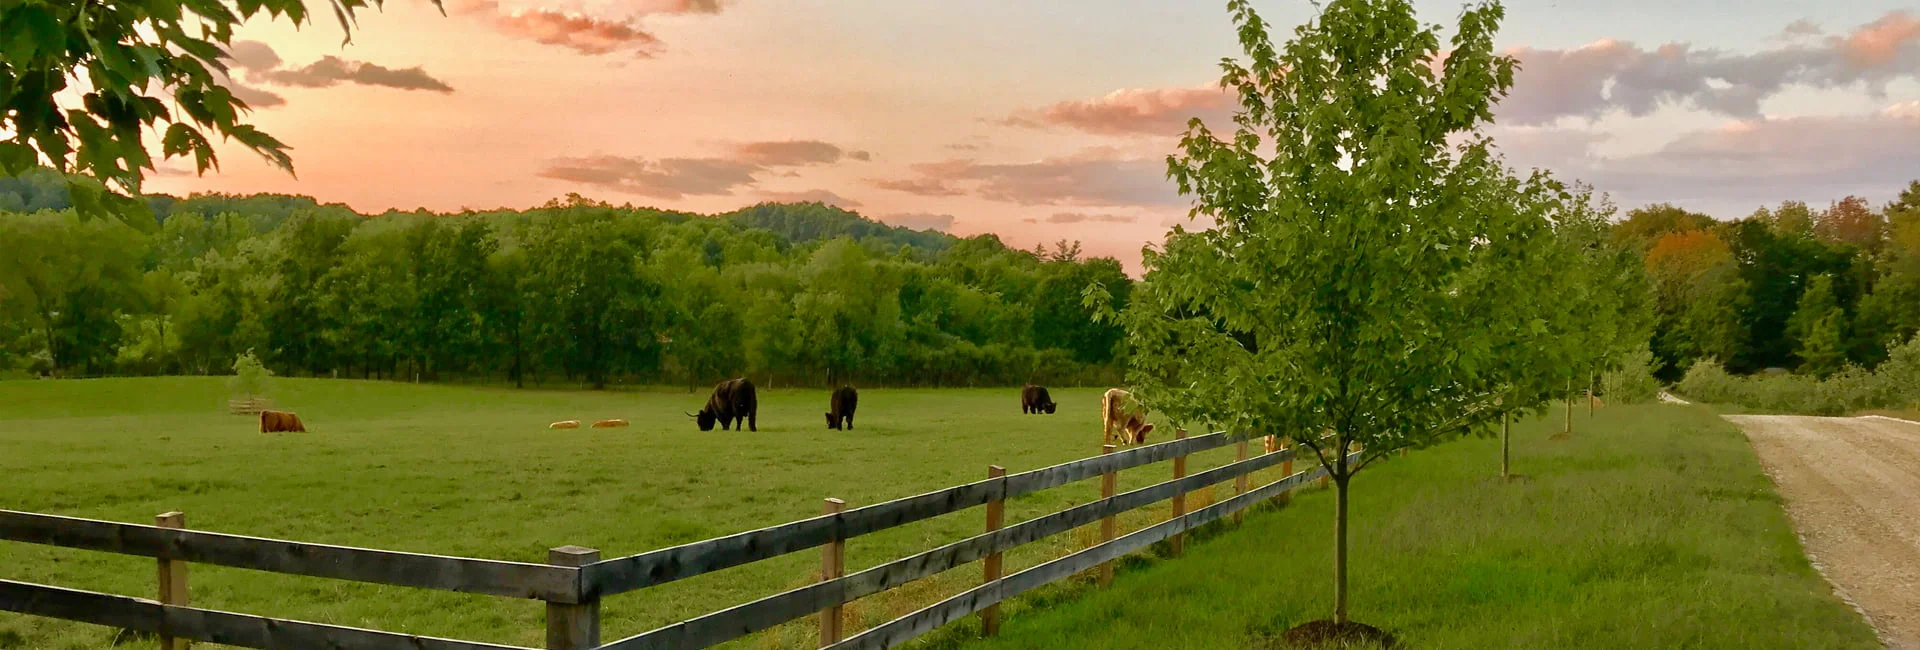 June Farms, Scottish Highland Cattle grazing_Capital-Saratoga Region